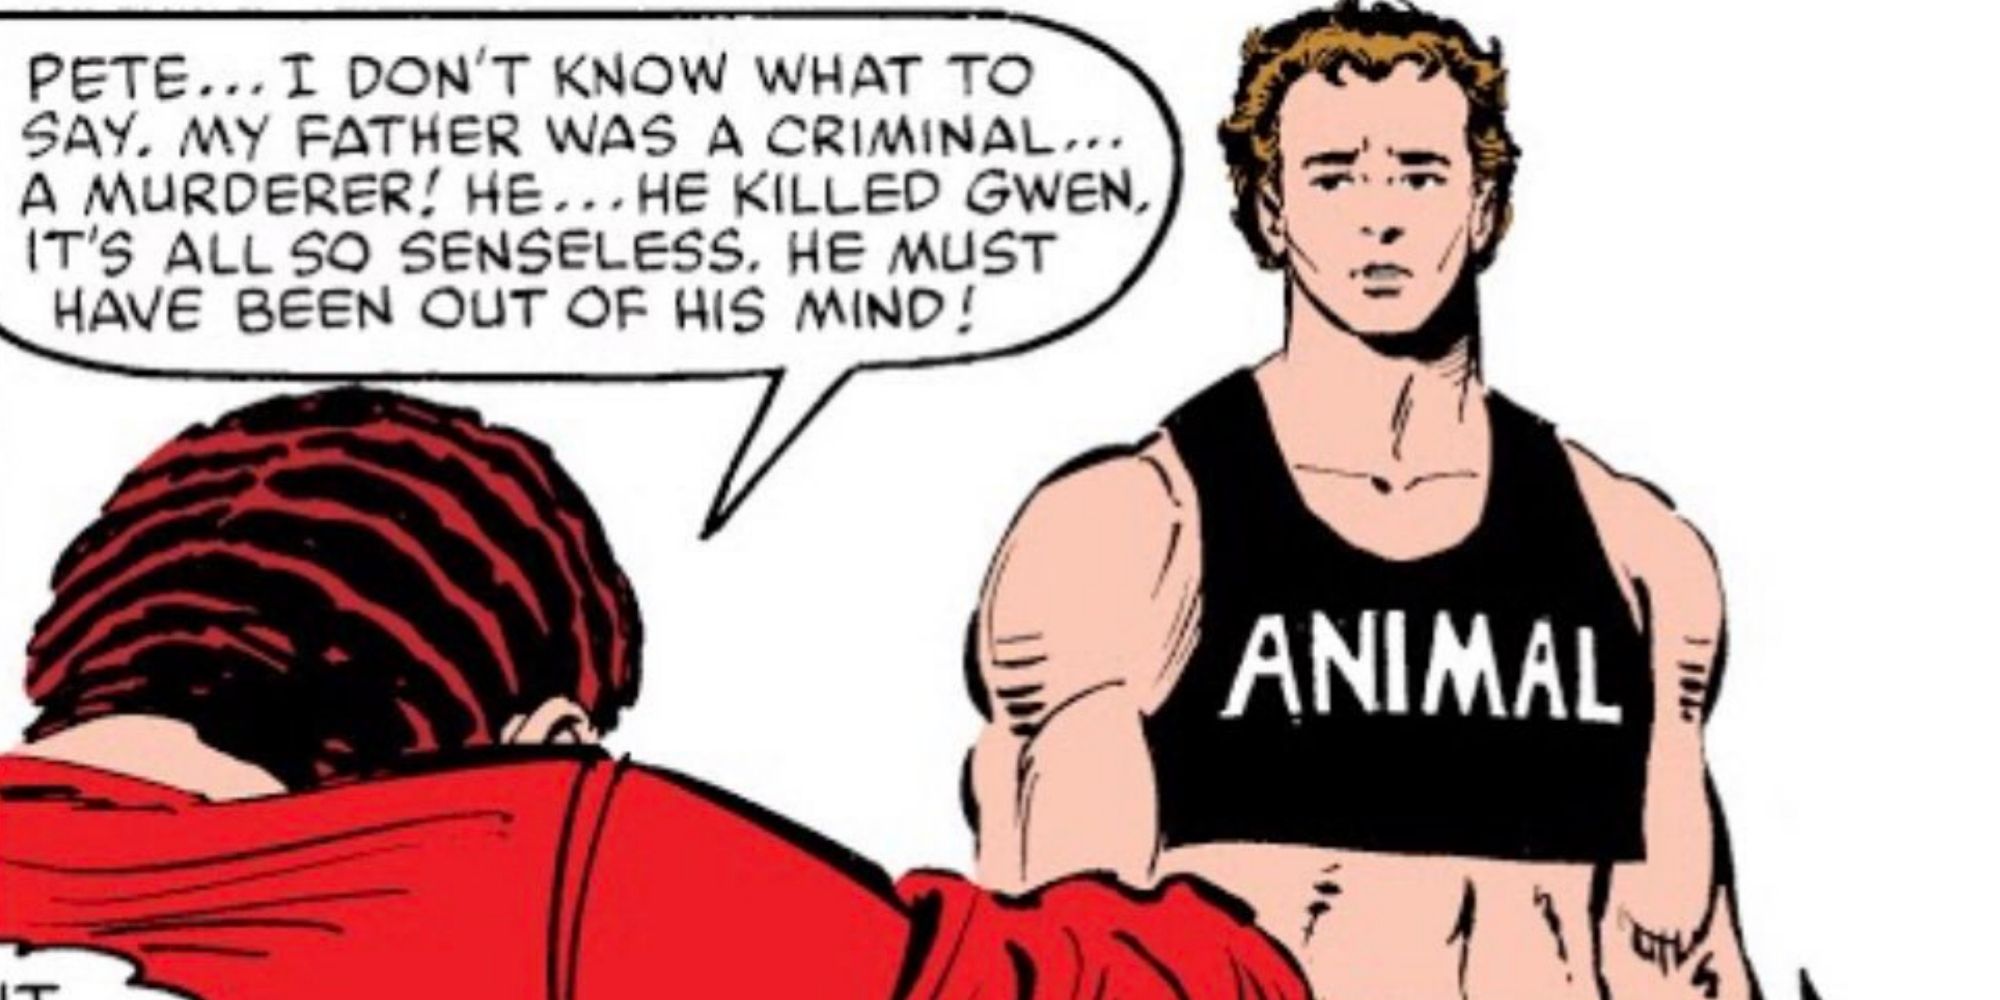 Peter Parker in Spider-Man wearing "Animal" crop top in Marvel Comics